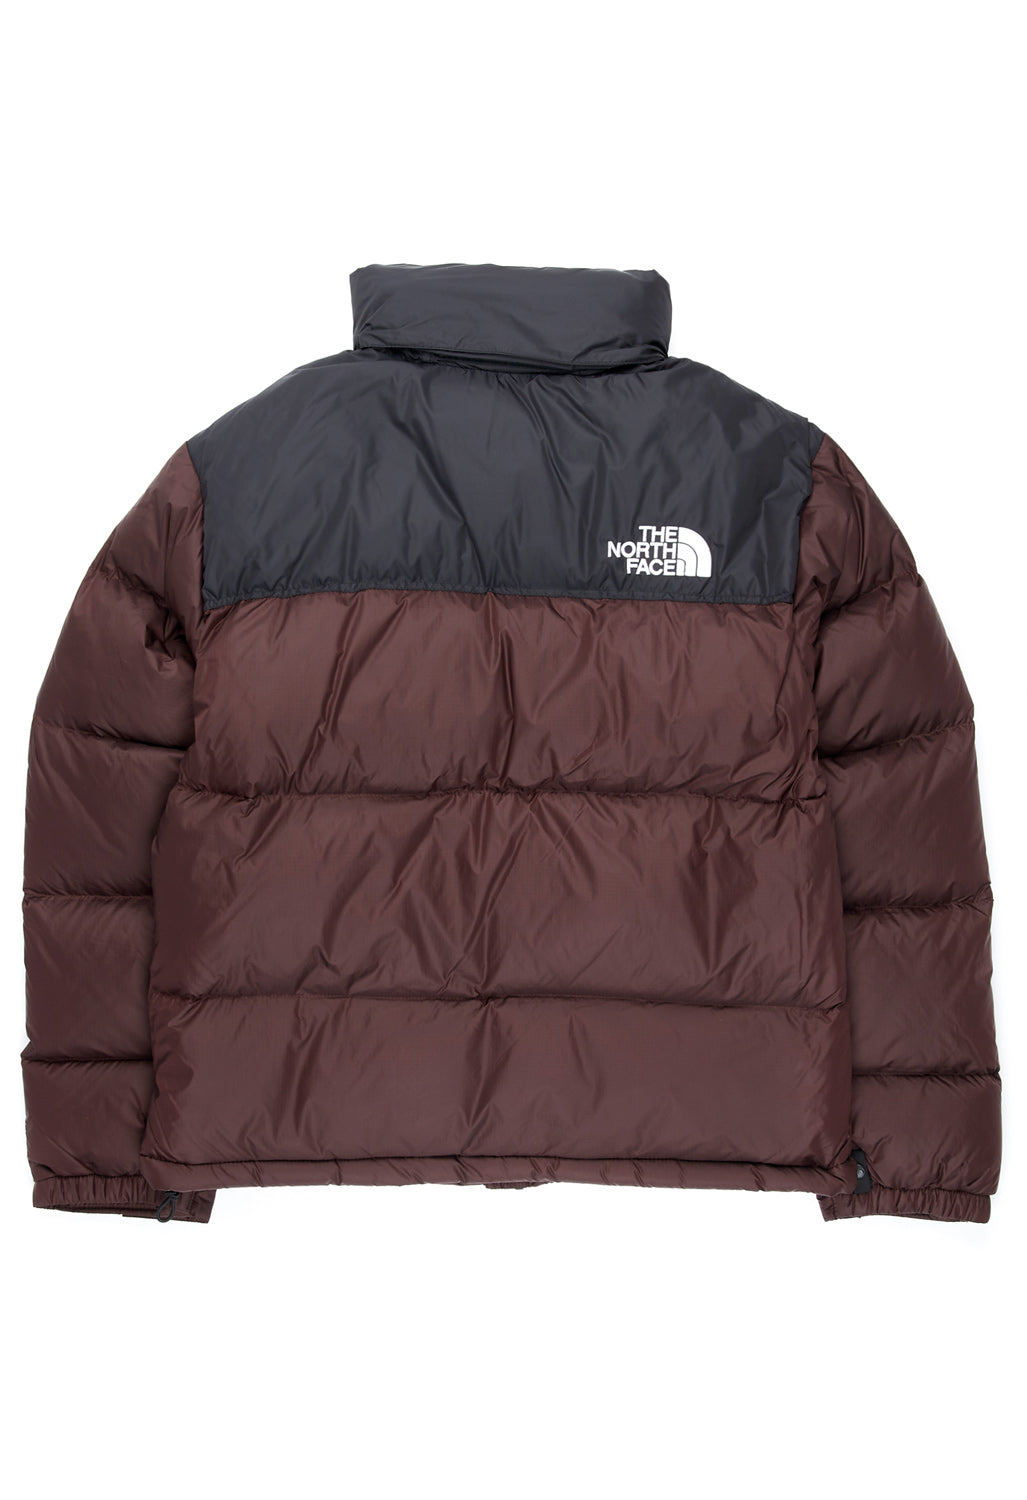 The North Face 1996 Retro Nuptse Men's Jacket - Coal Brown-TNF Black